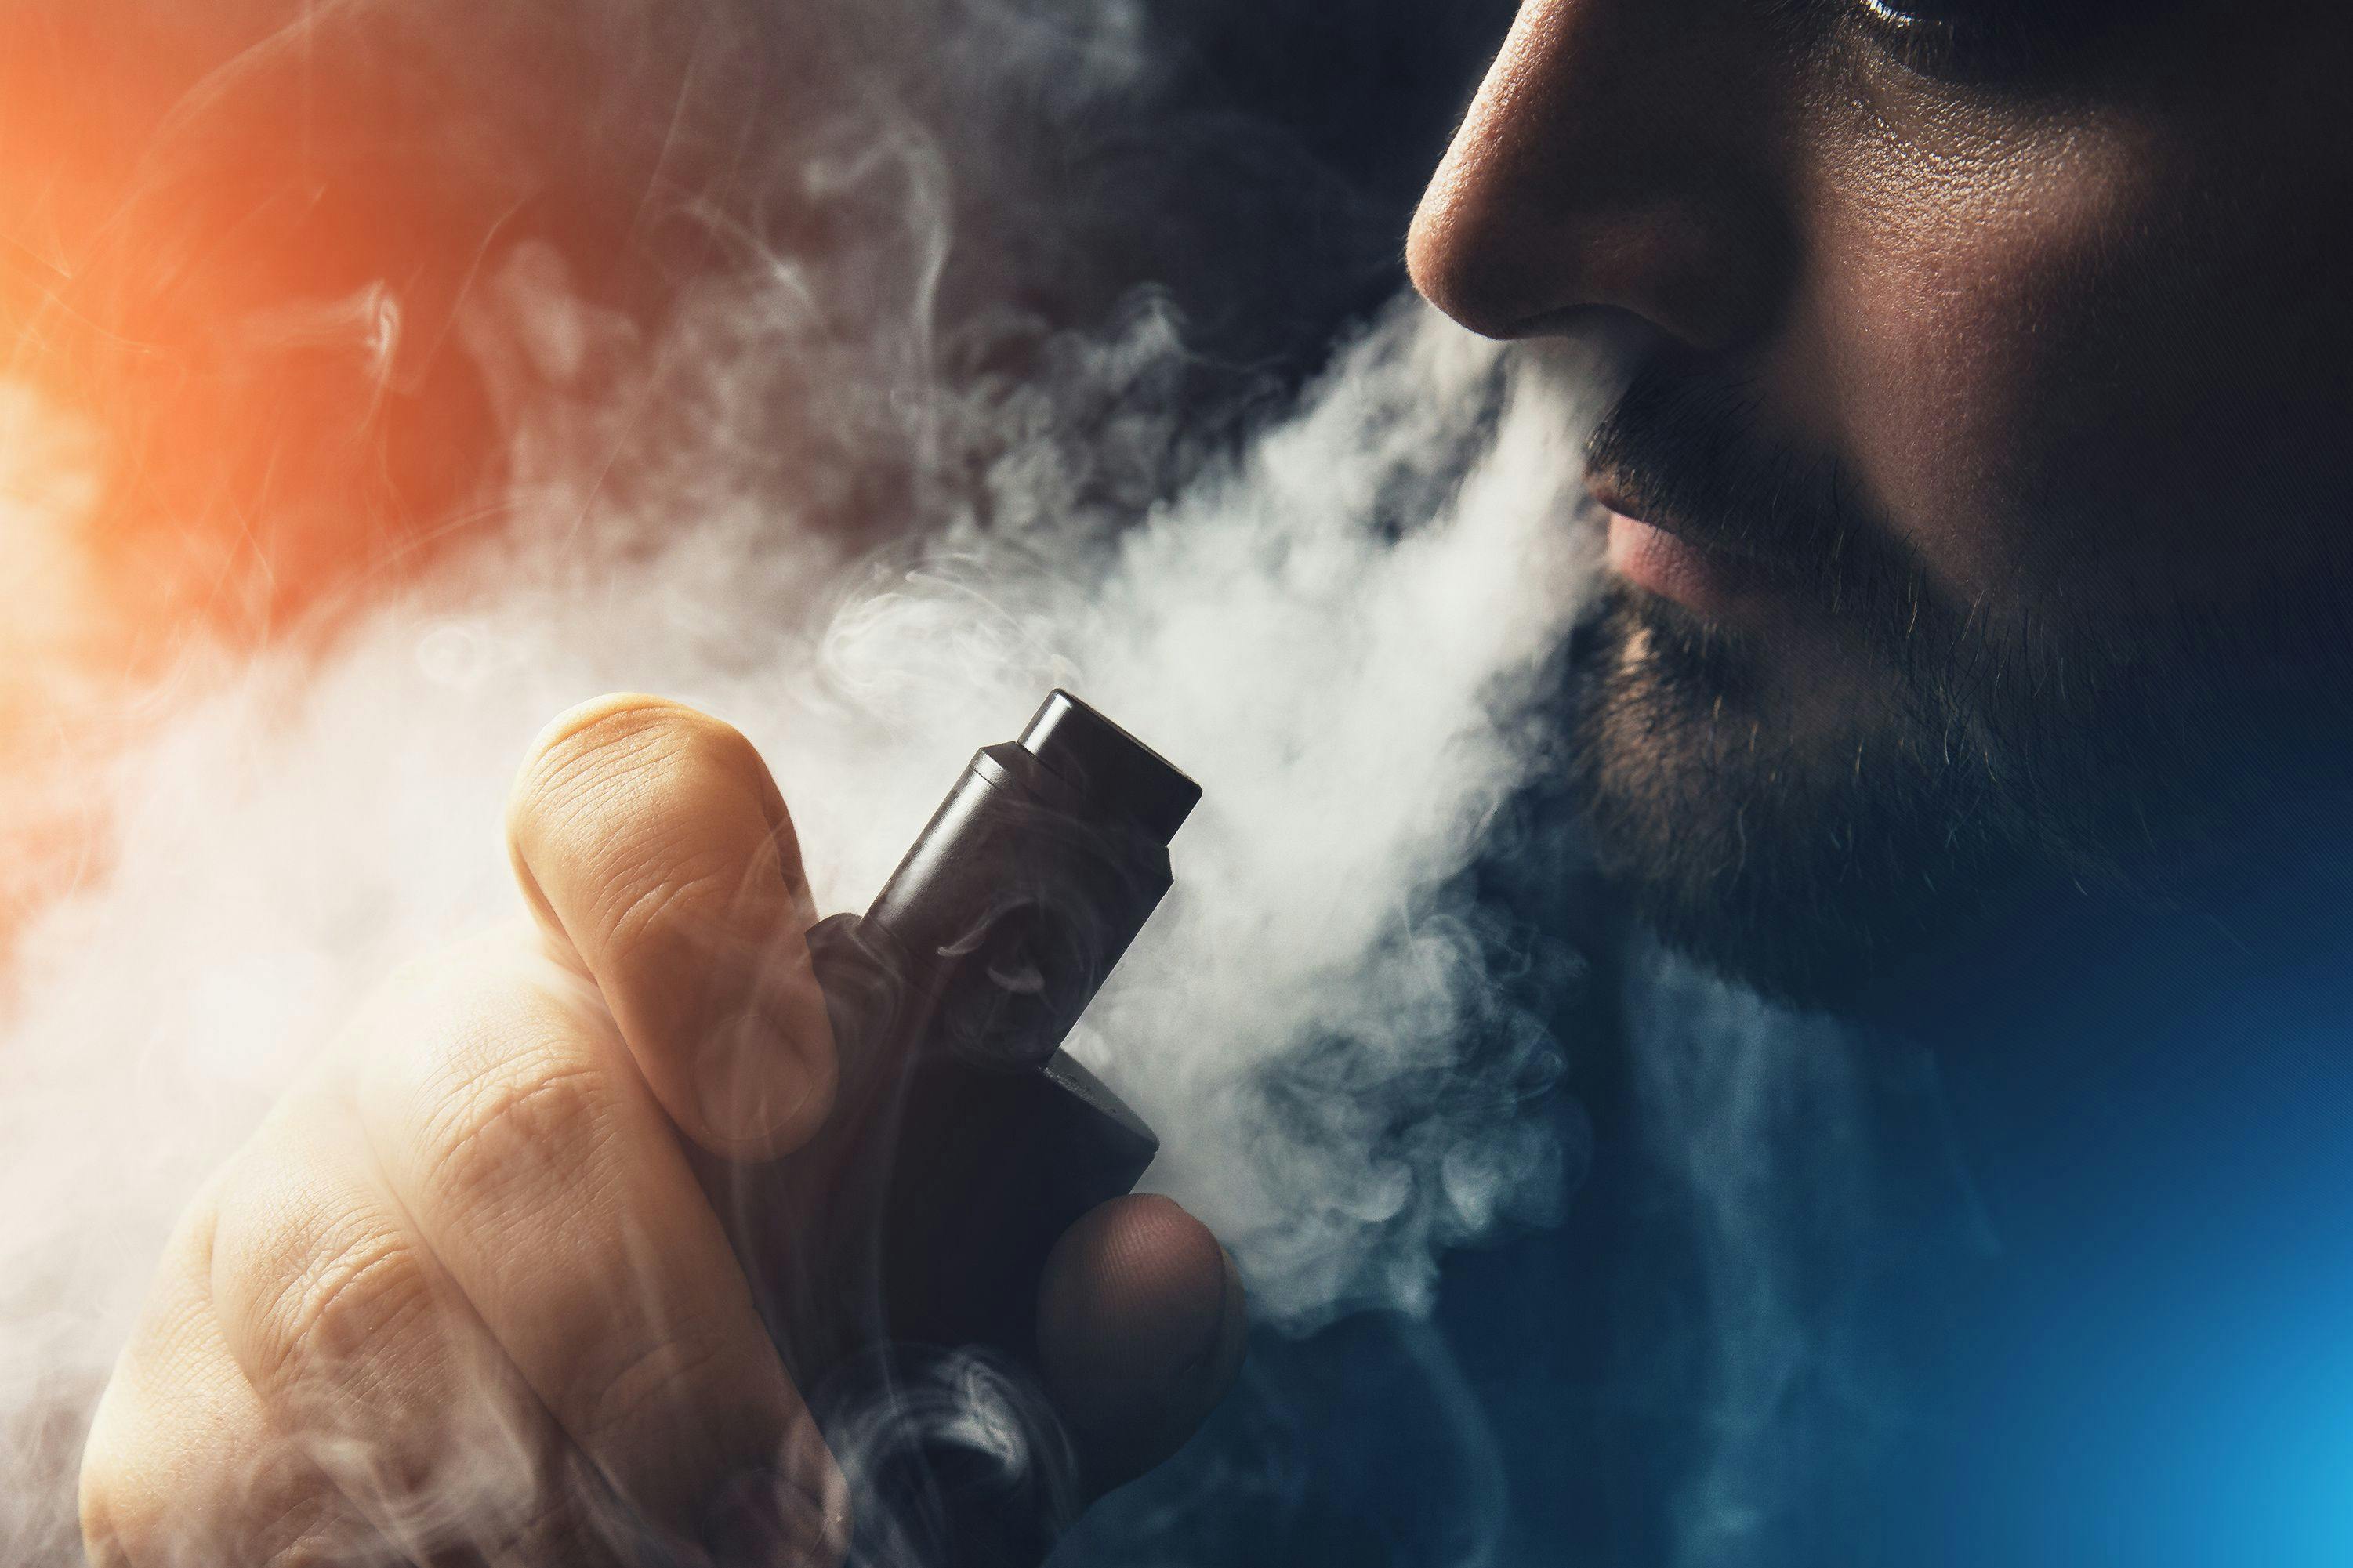 Man using an e-cigarette | Image Credit: DedMityay - stock.adobe.com